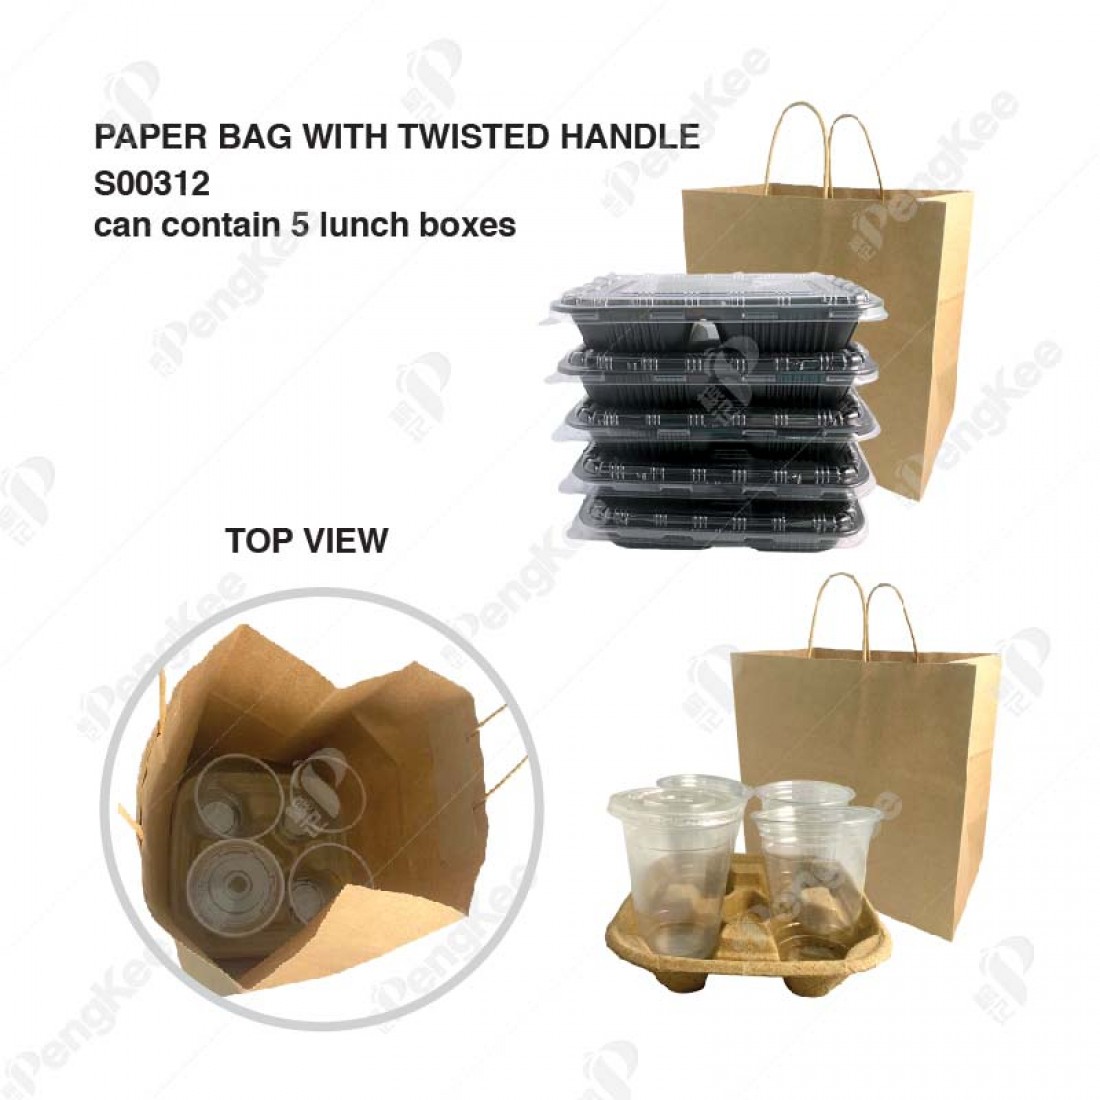 CARTON BROWN TWISTED HANDLE PAPER BAG NO.1- 27 x 21 x 11 (CM)